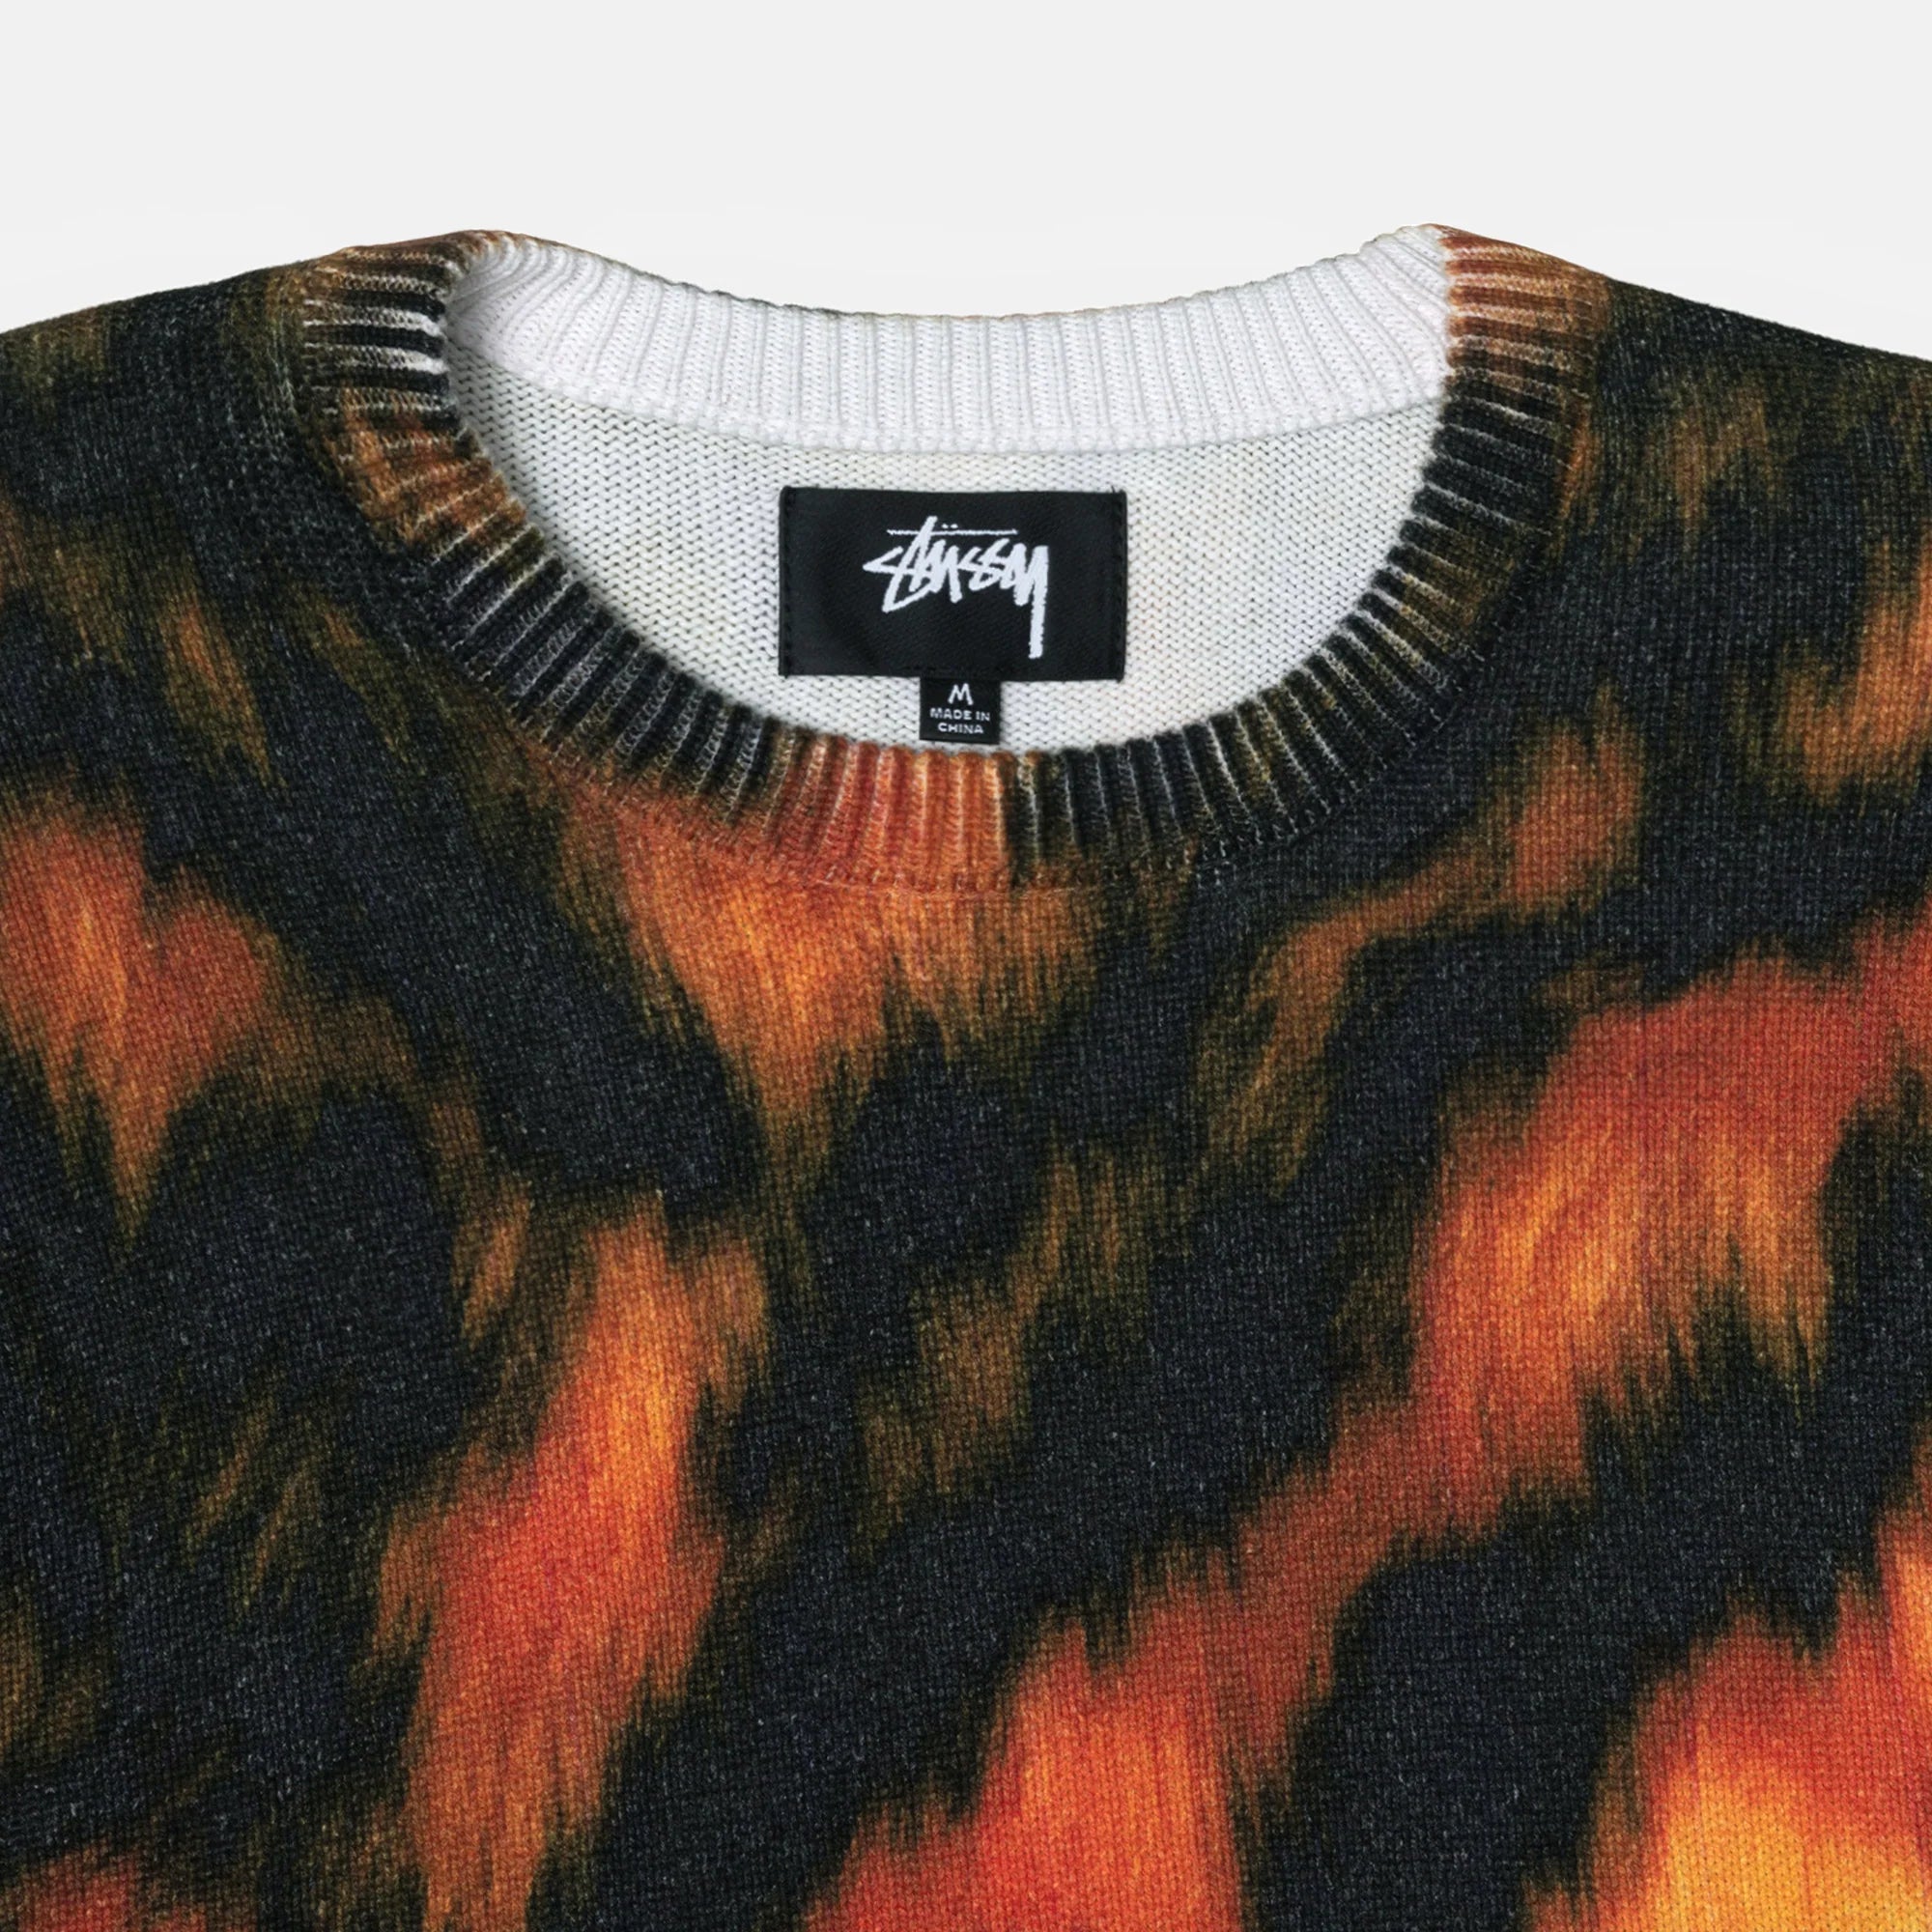 Unspoken  Stussy Printed Fur Sweater - Tiger